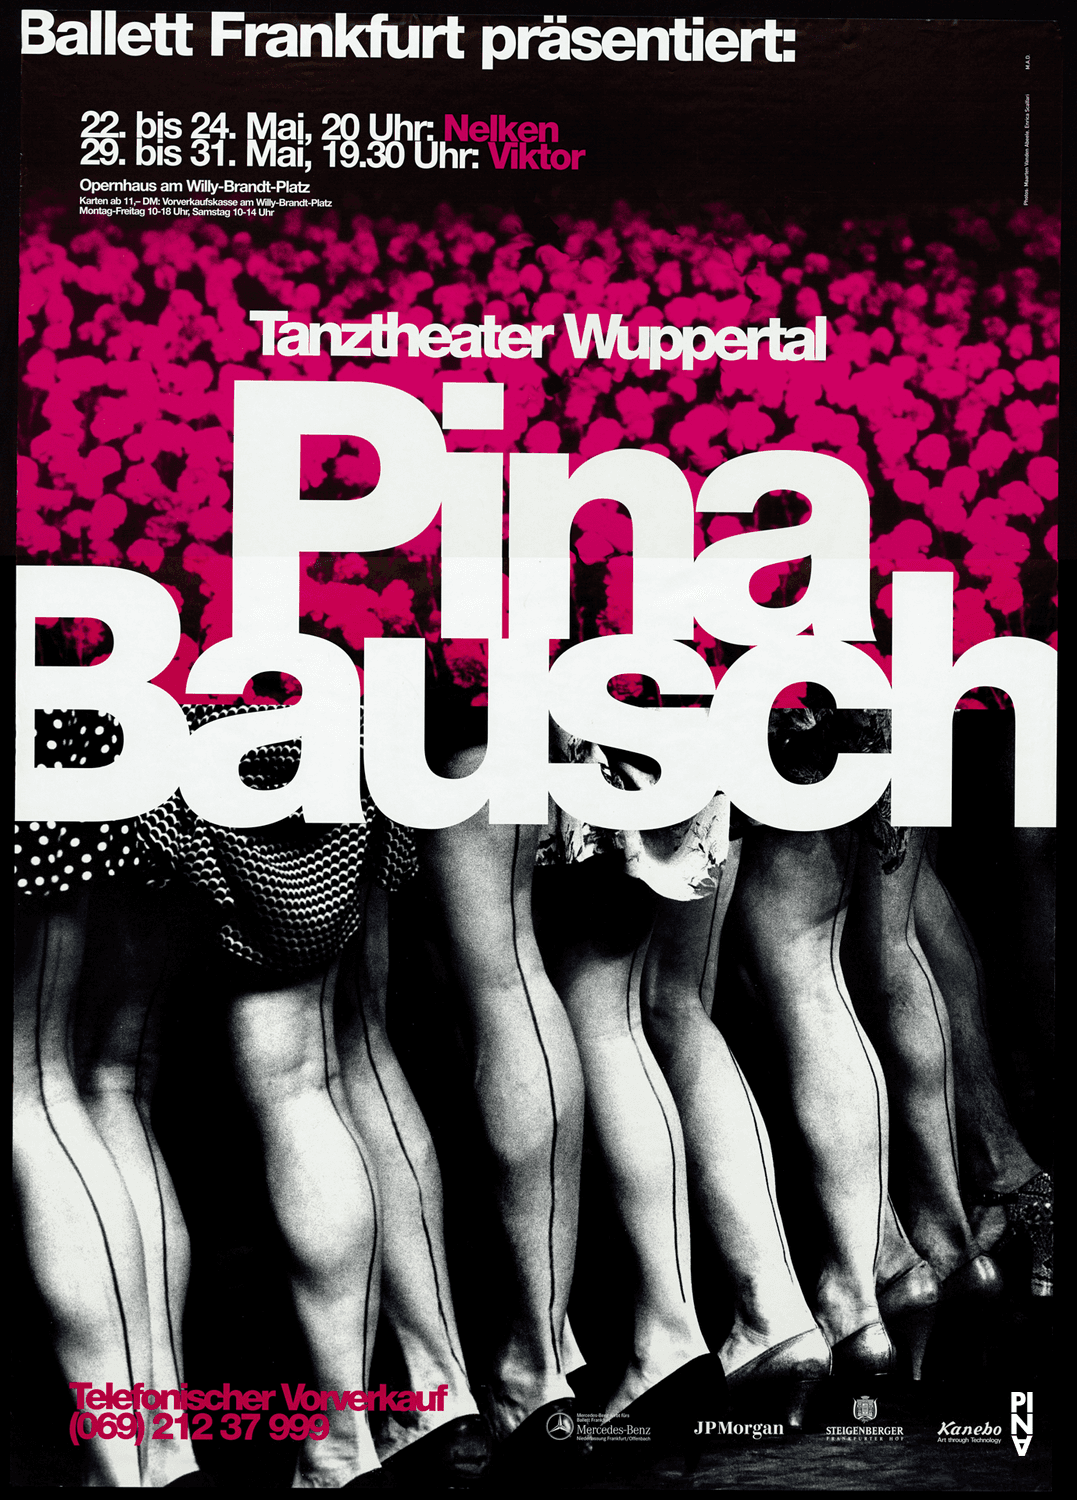 Poster: Maarten Vanden Abeele, Enrica Scalfari © Pina Bausch Foundation